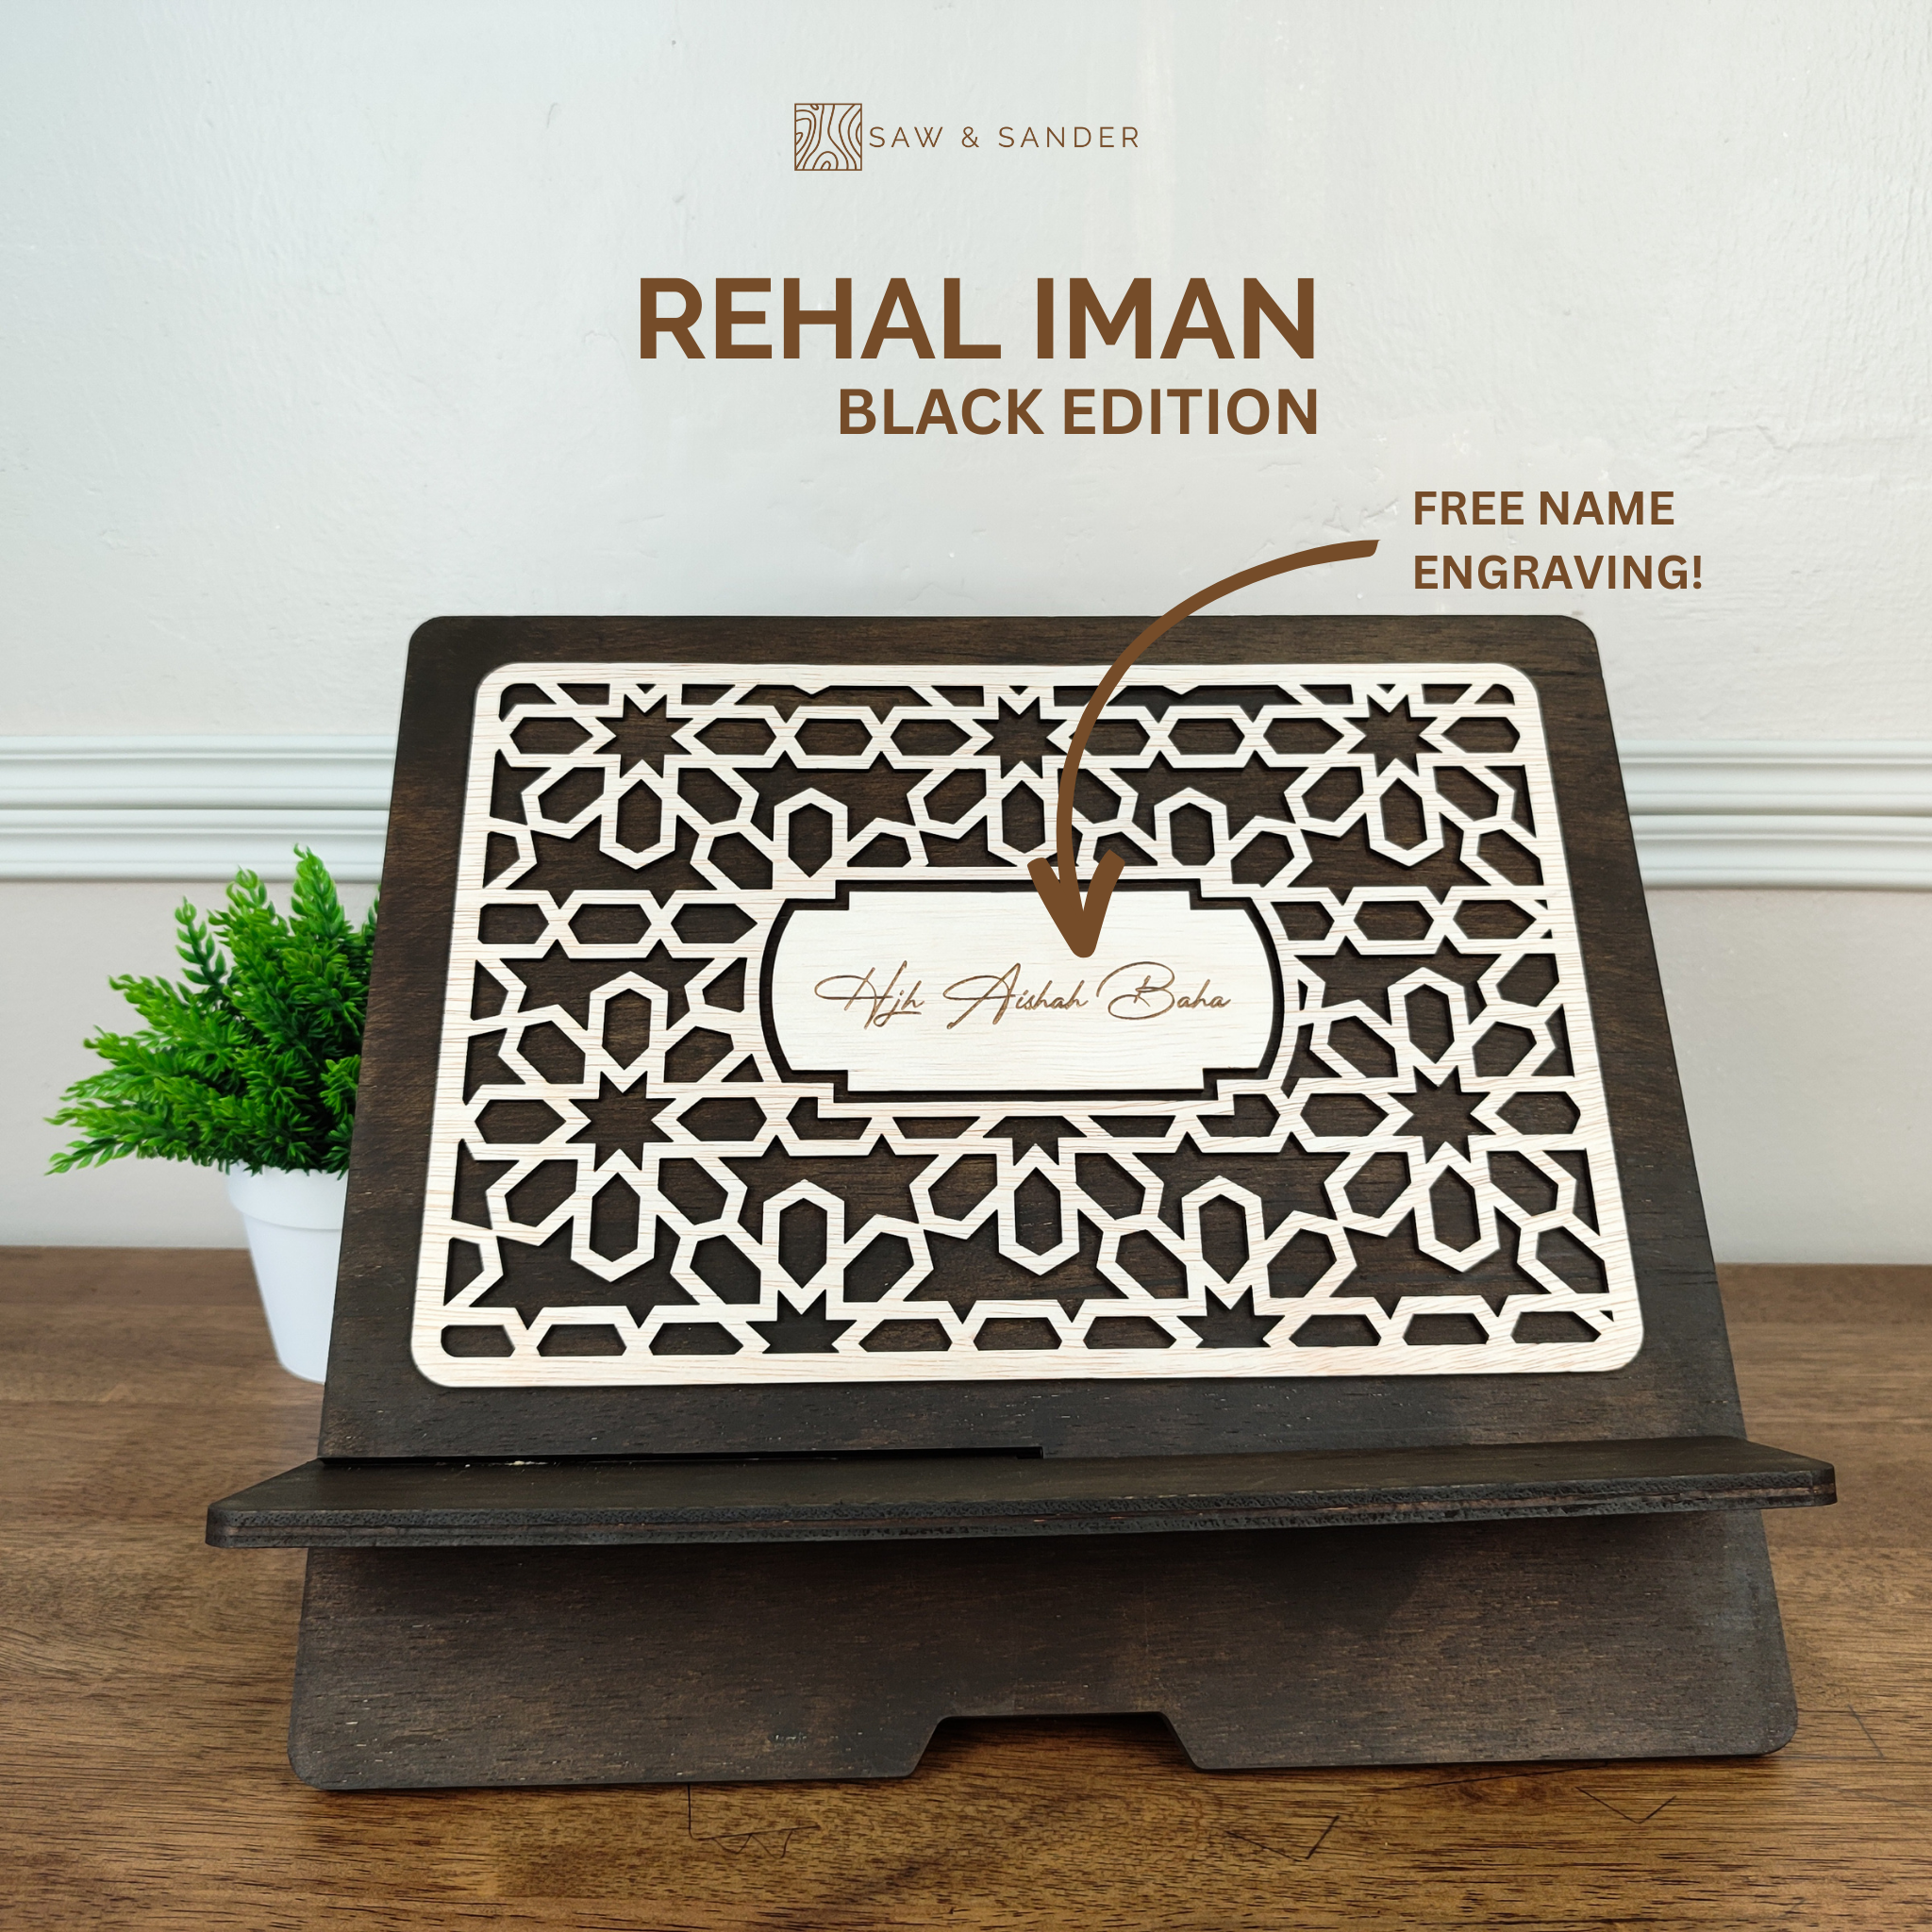 Rehal Iman Black Edition Engrave